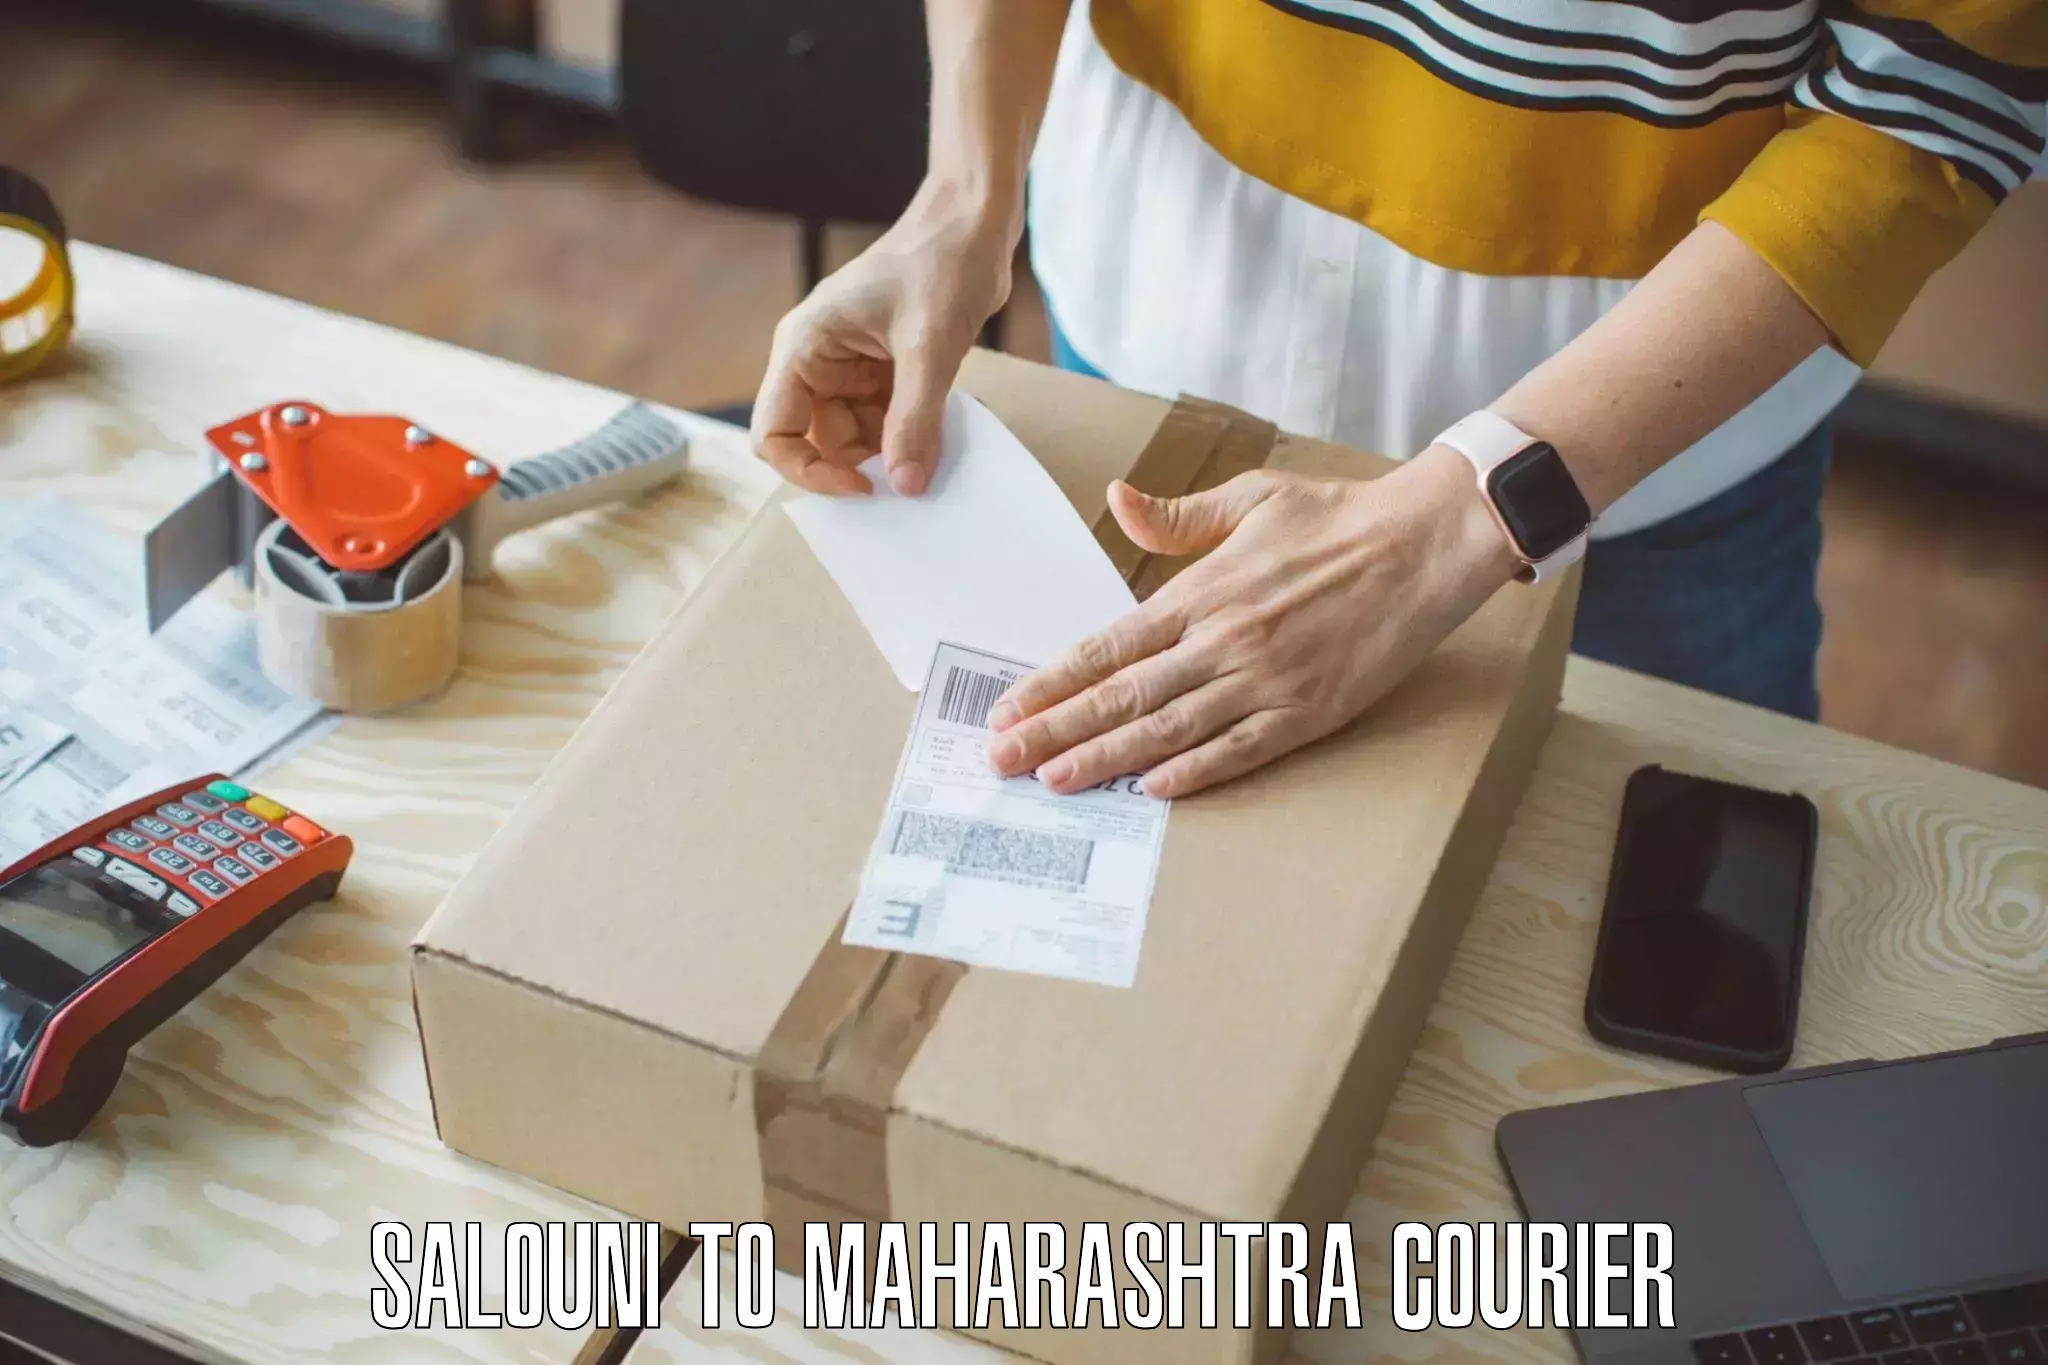 Moving service excellence Salouni to Maharashtra